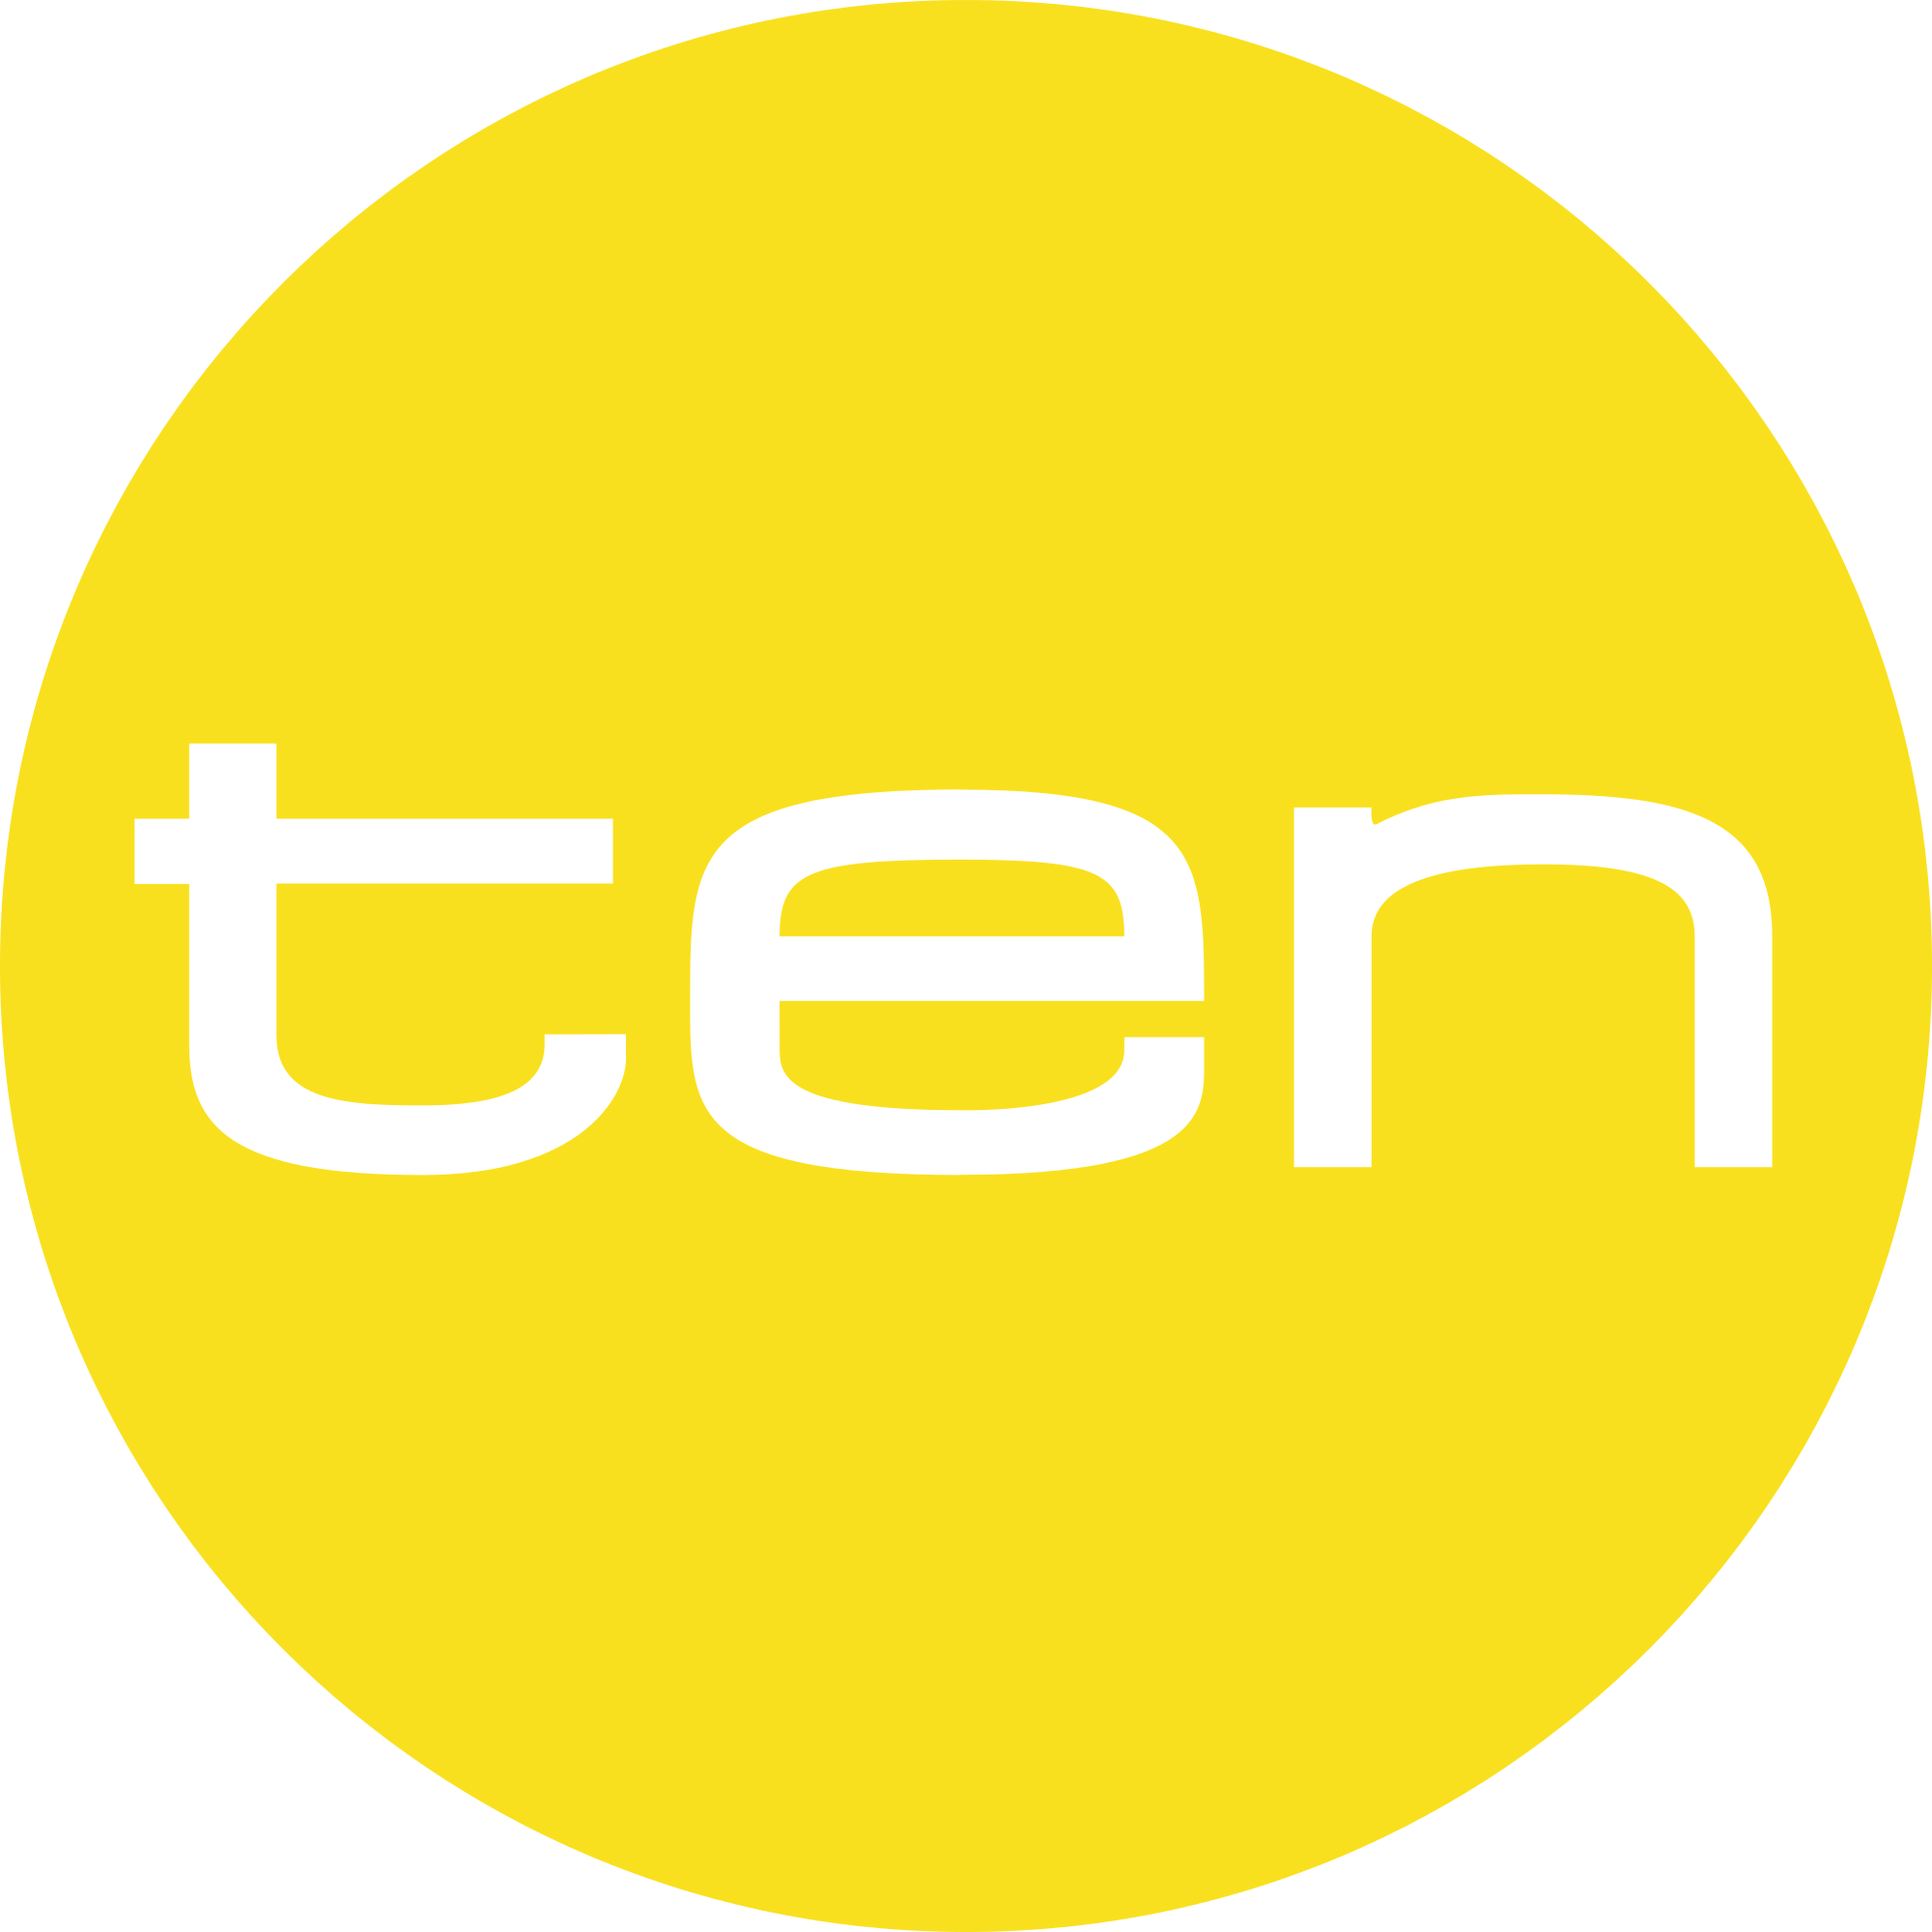 Ten Logo - File:Network Ten logo (solid yellow).svg - Wikimedia Commons